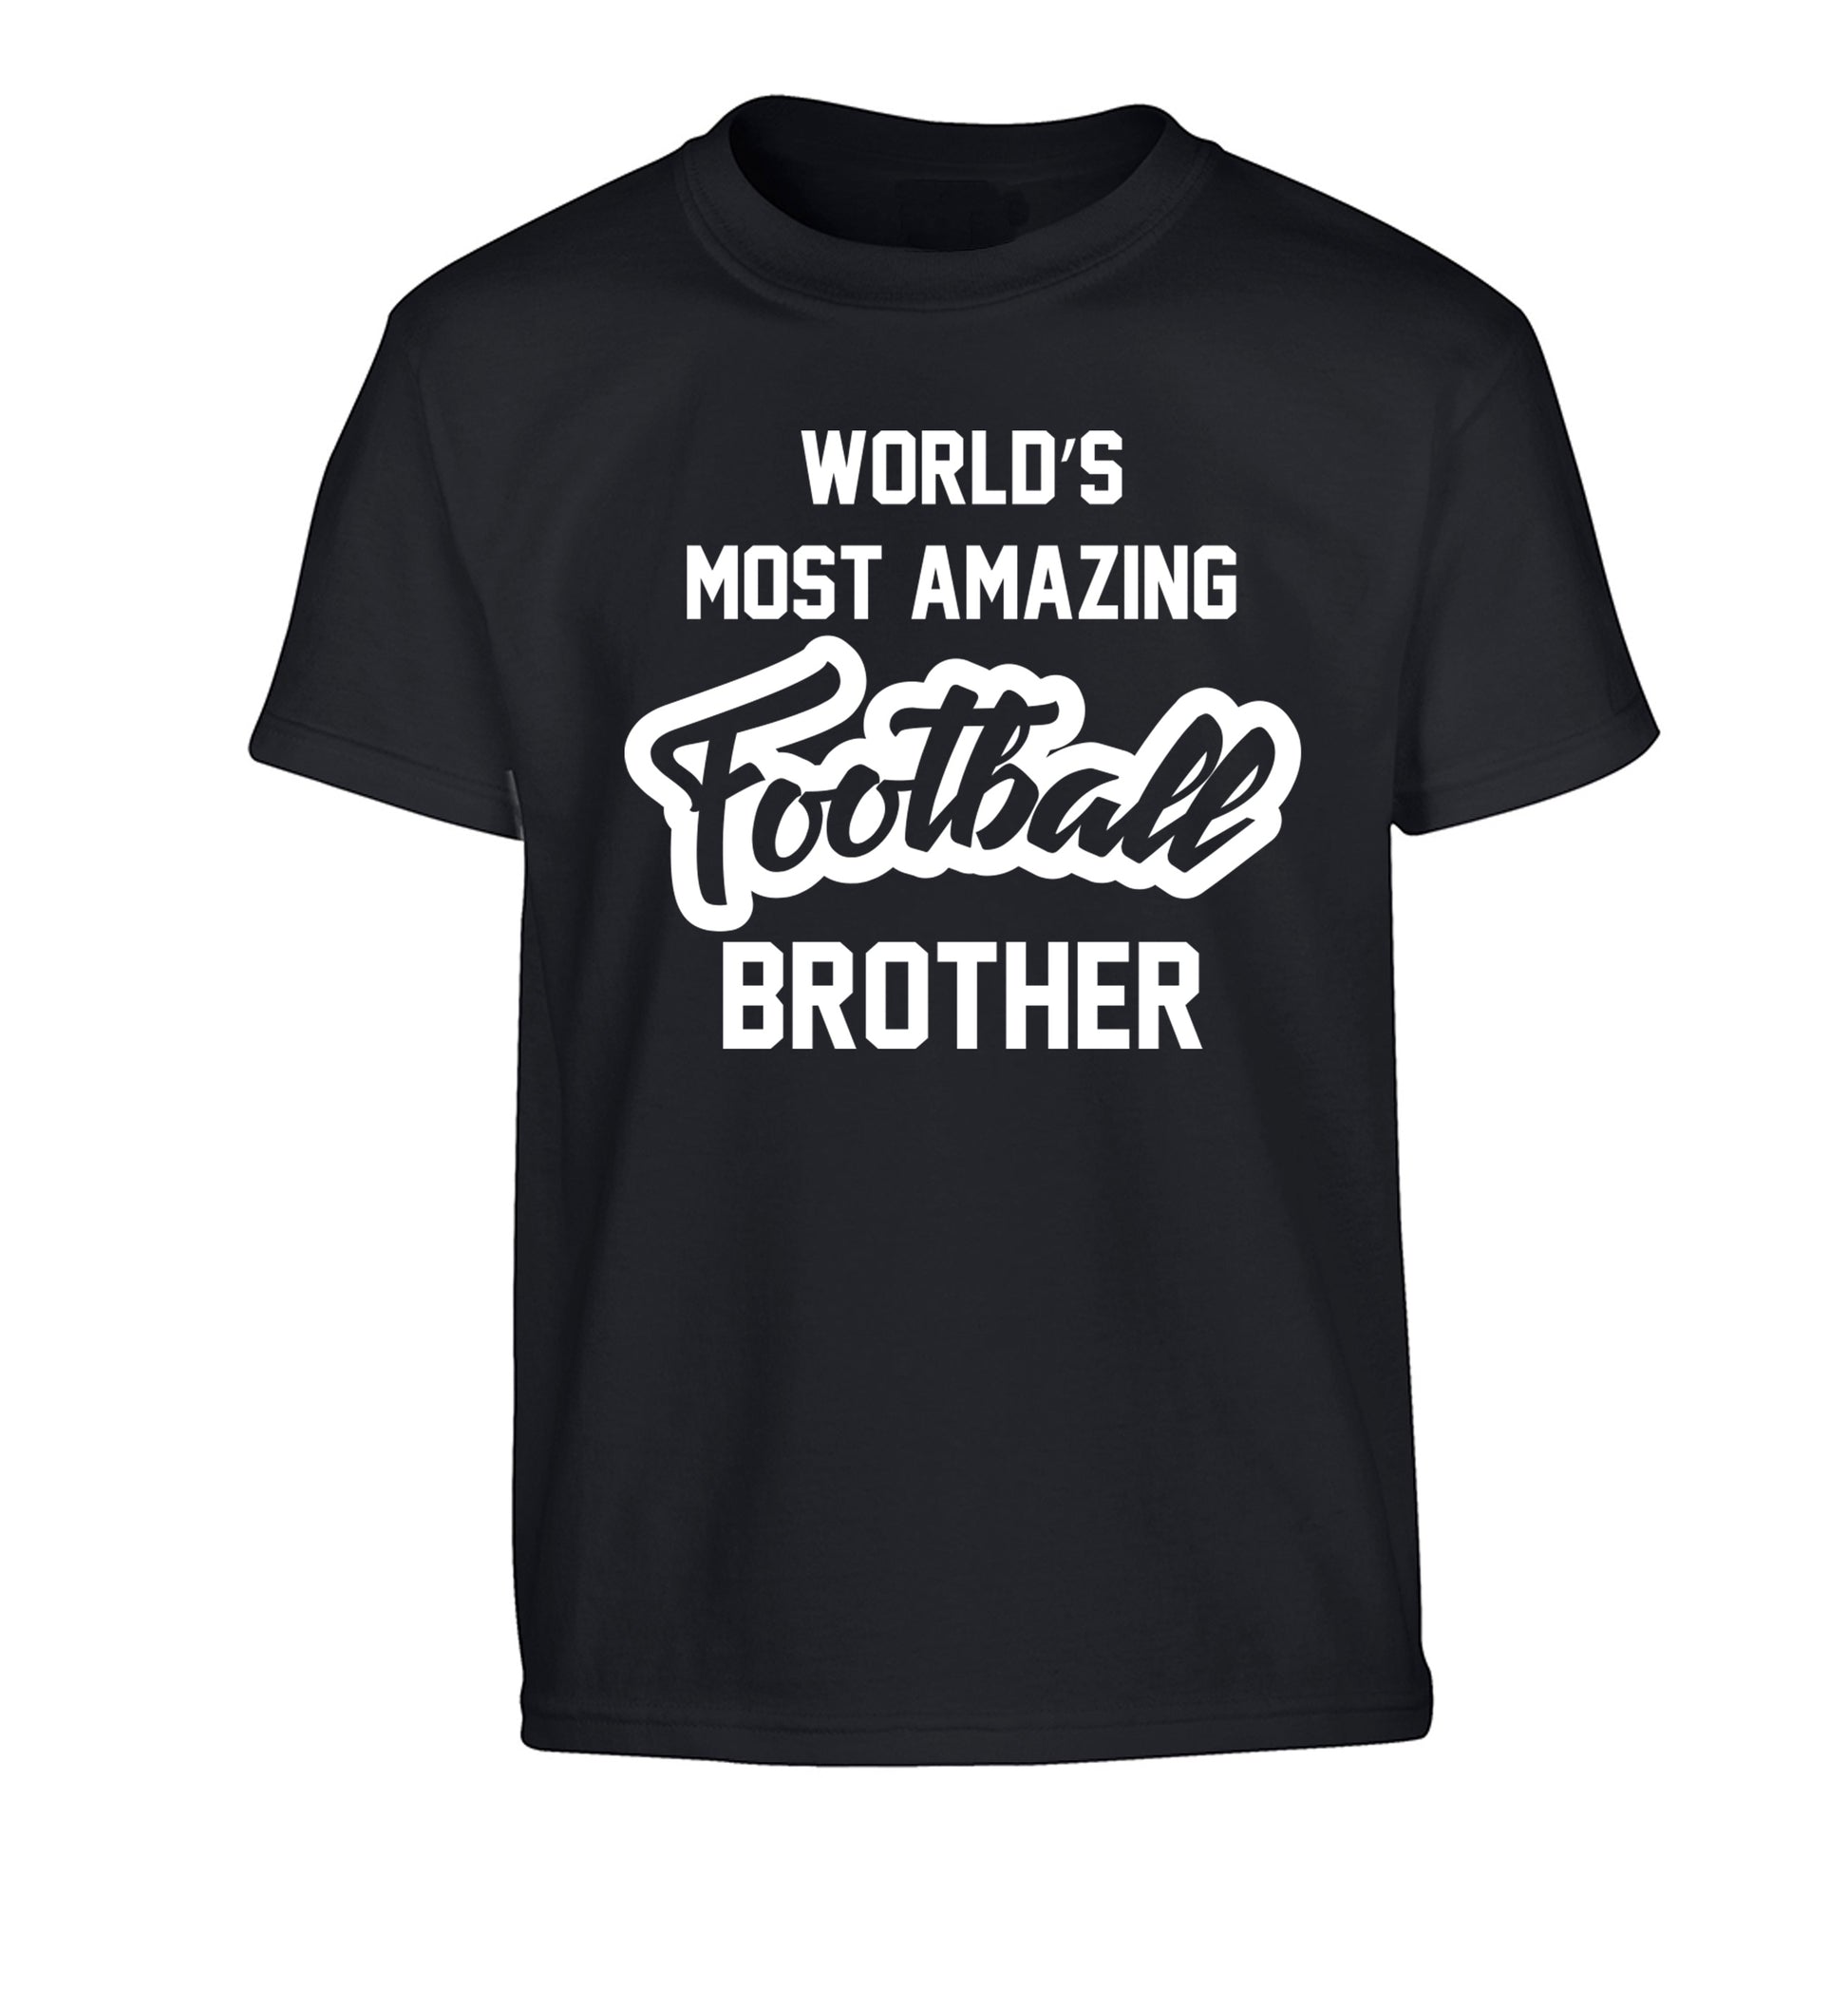 Worlds most amazing football brother Children's black Tshirt 12-14 Years